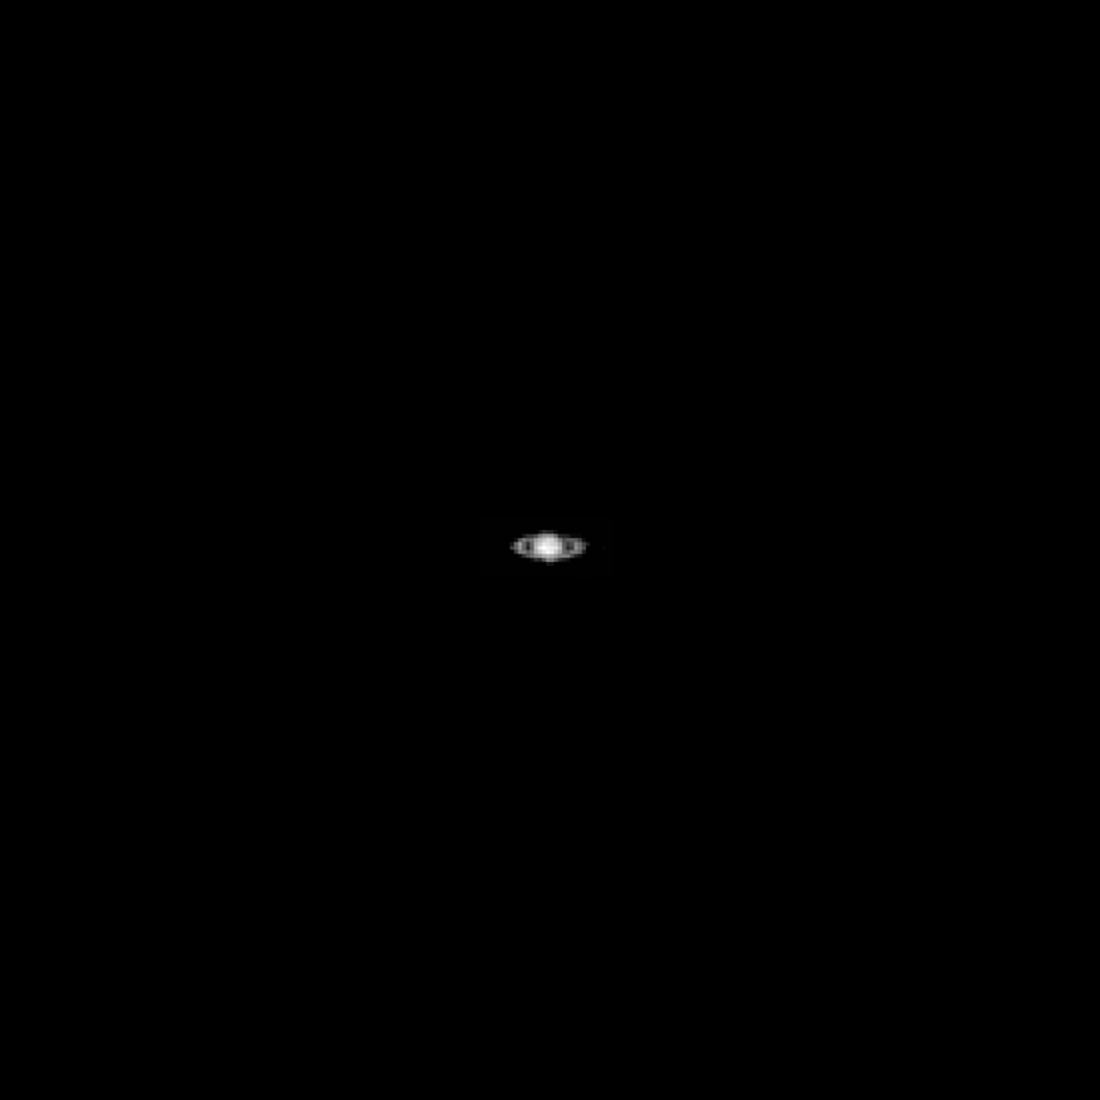 NAC image of Saturn enlarged 4x